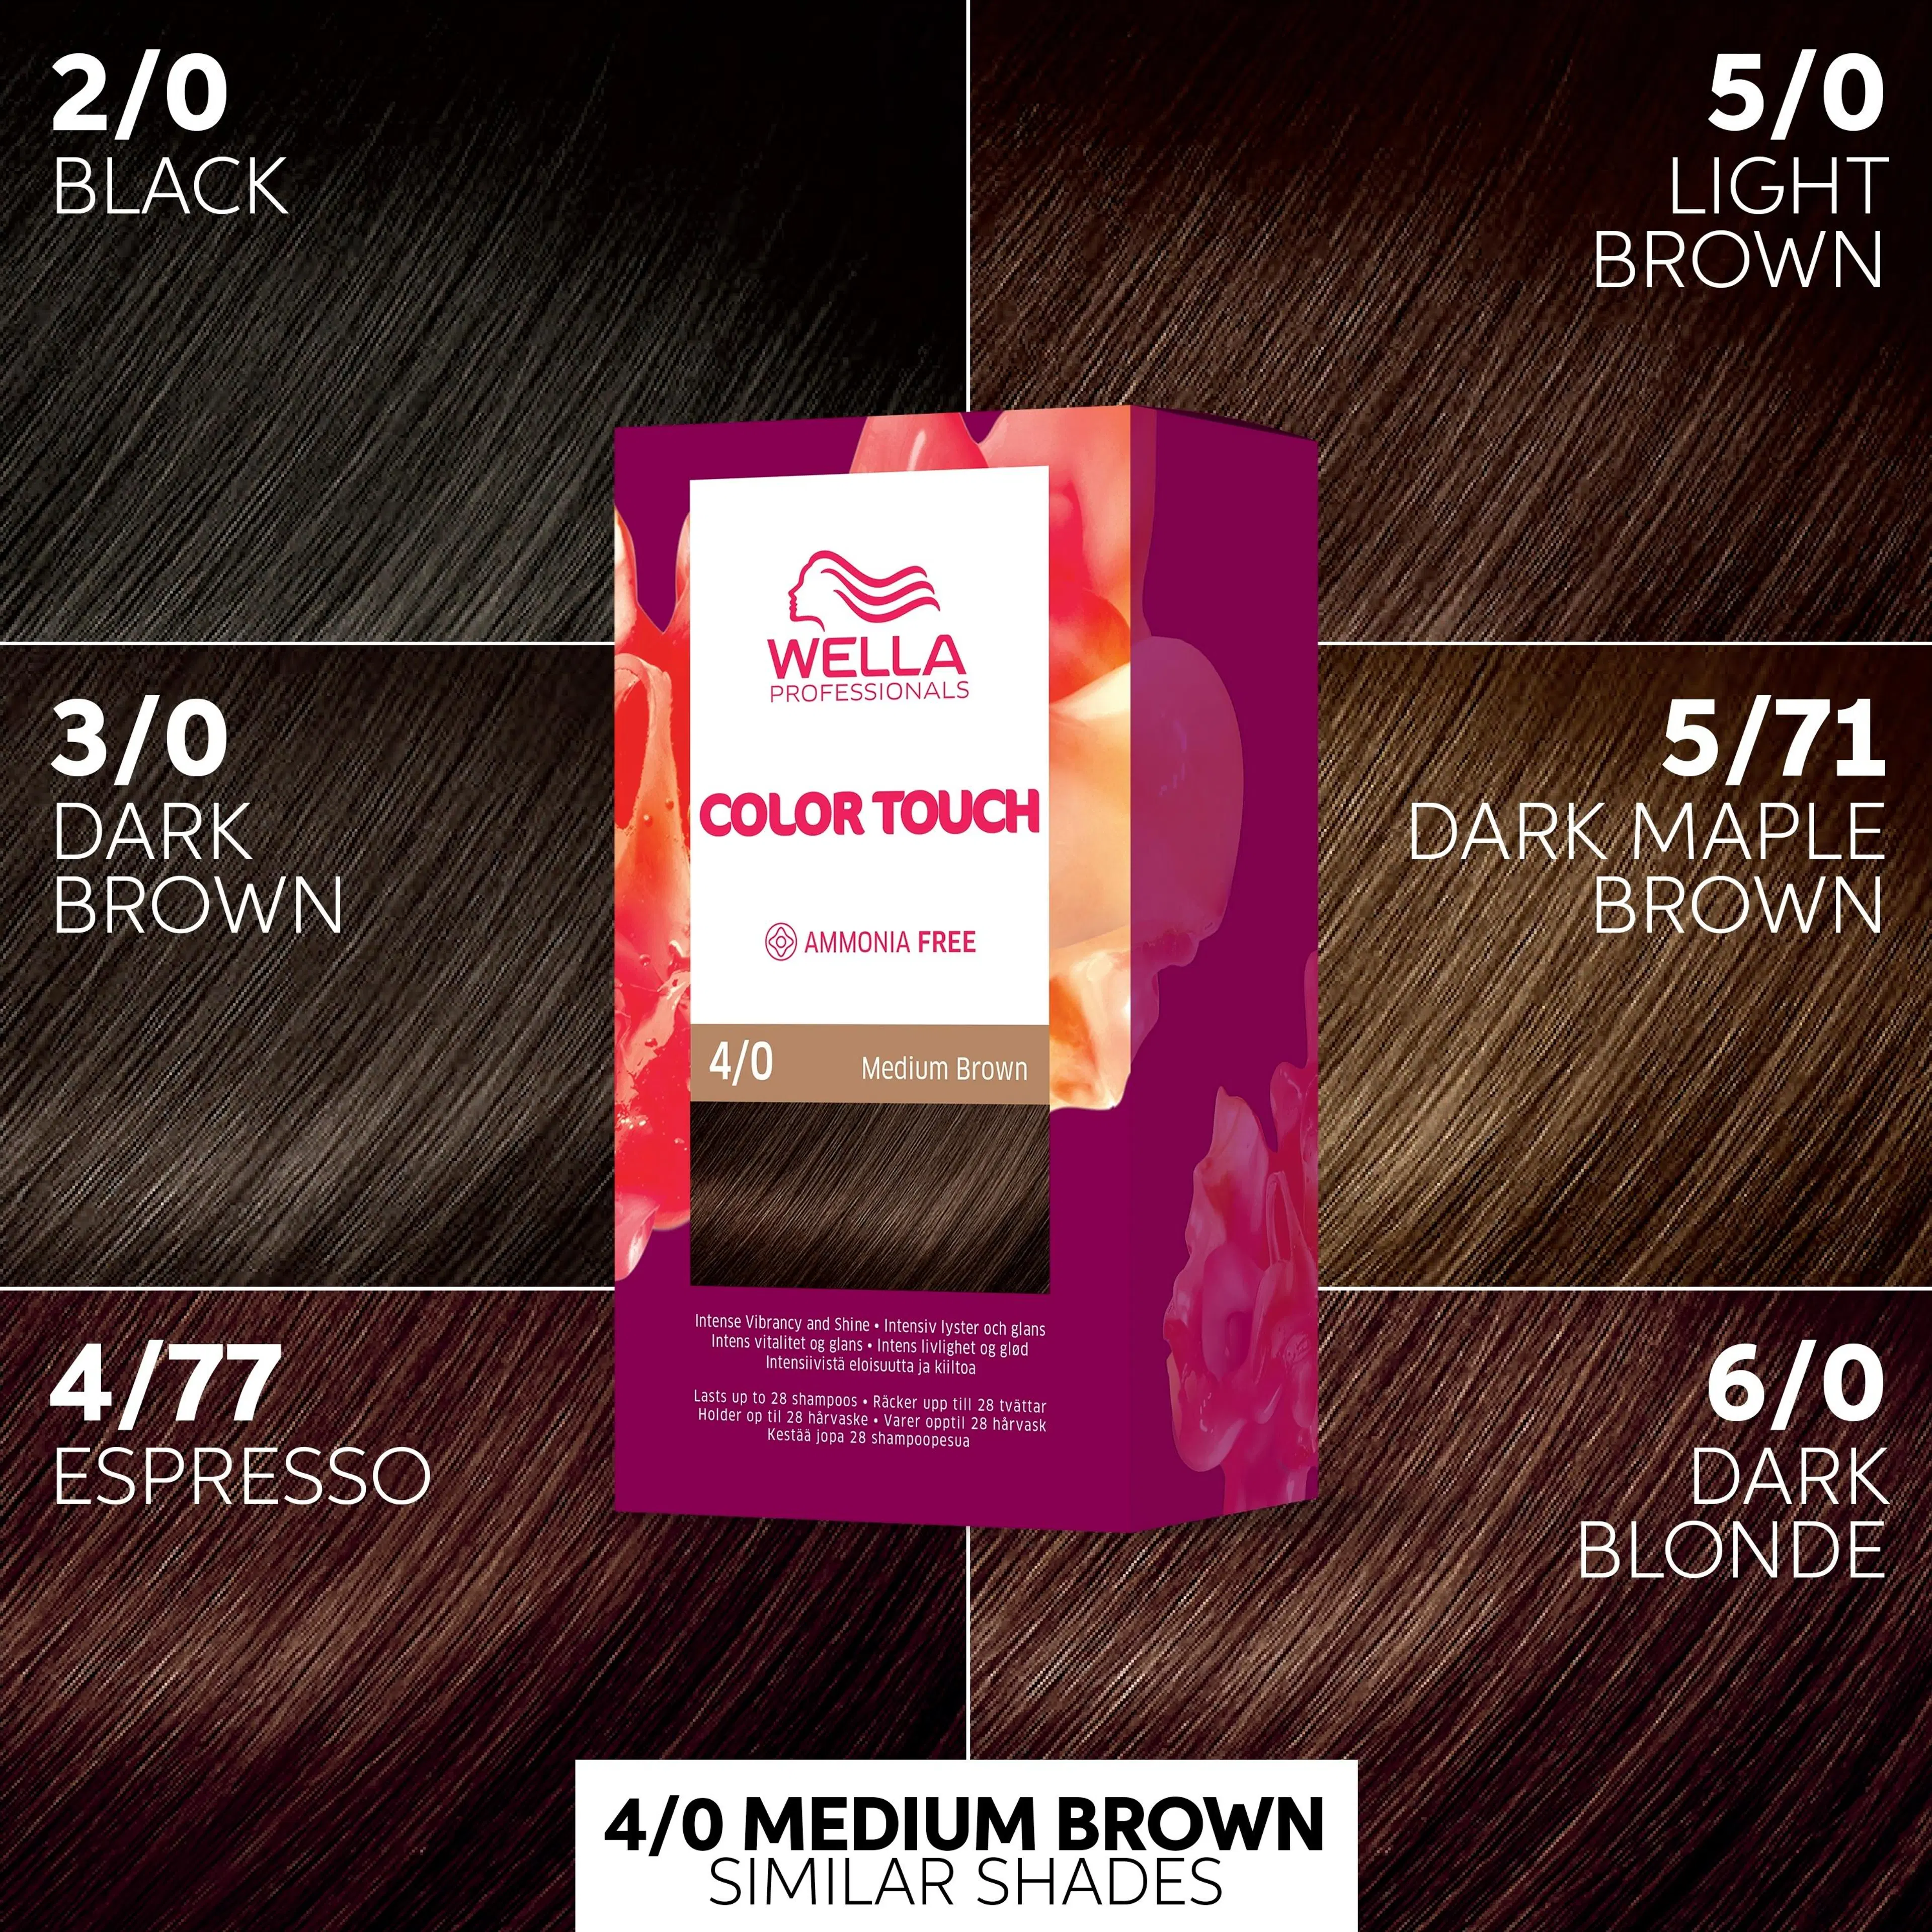 Wella Professionals Color Touch Pure Naturals Medium Brown 4/0 kotiväri 130 ml